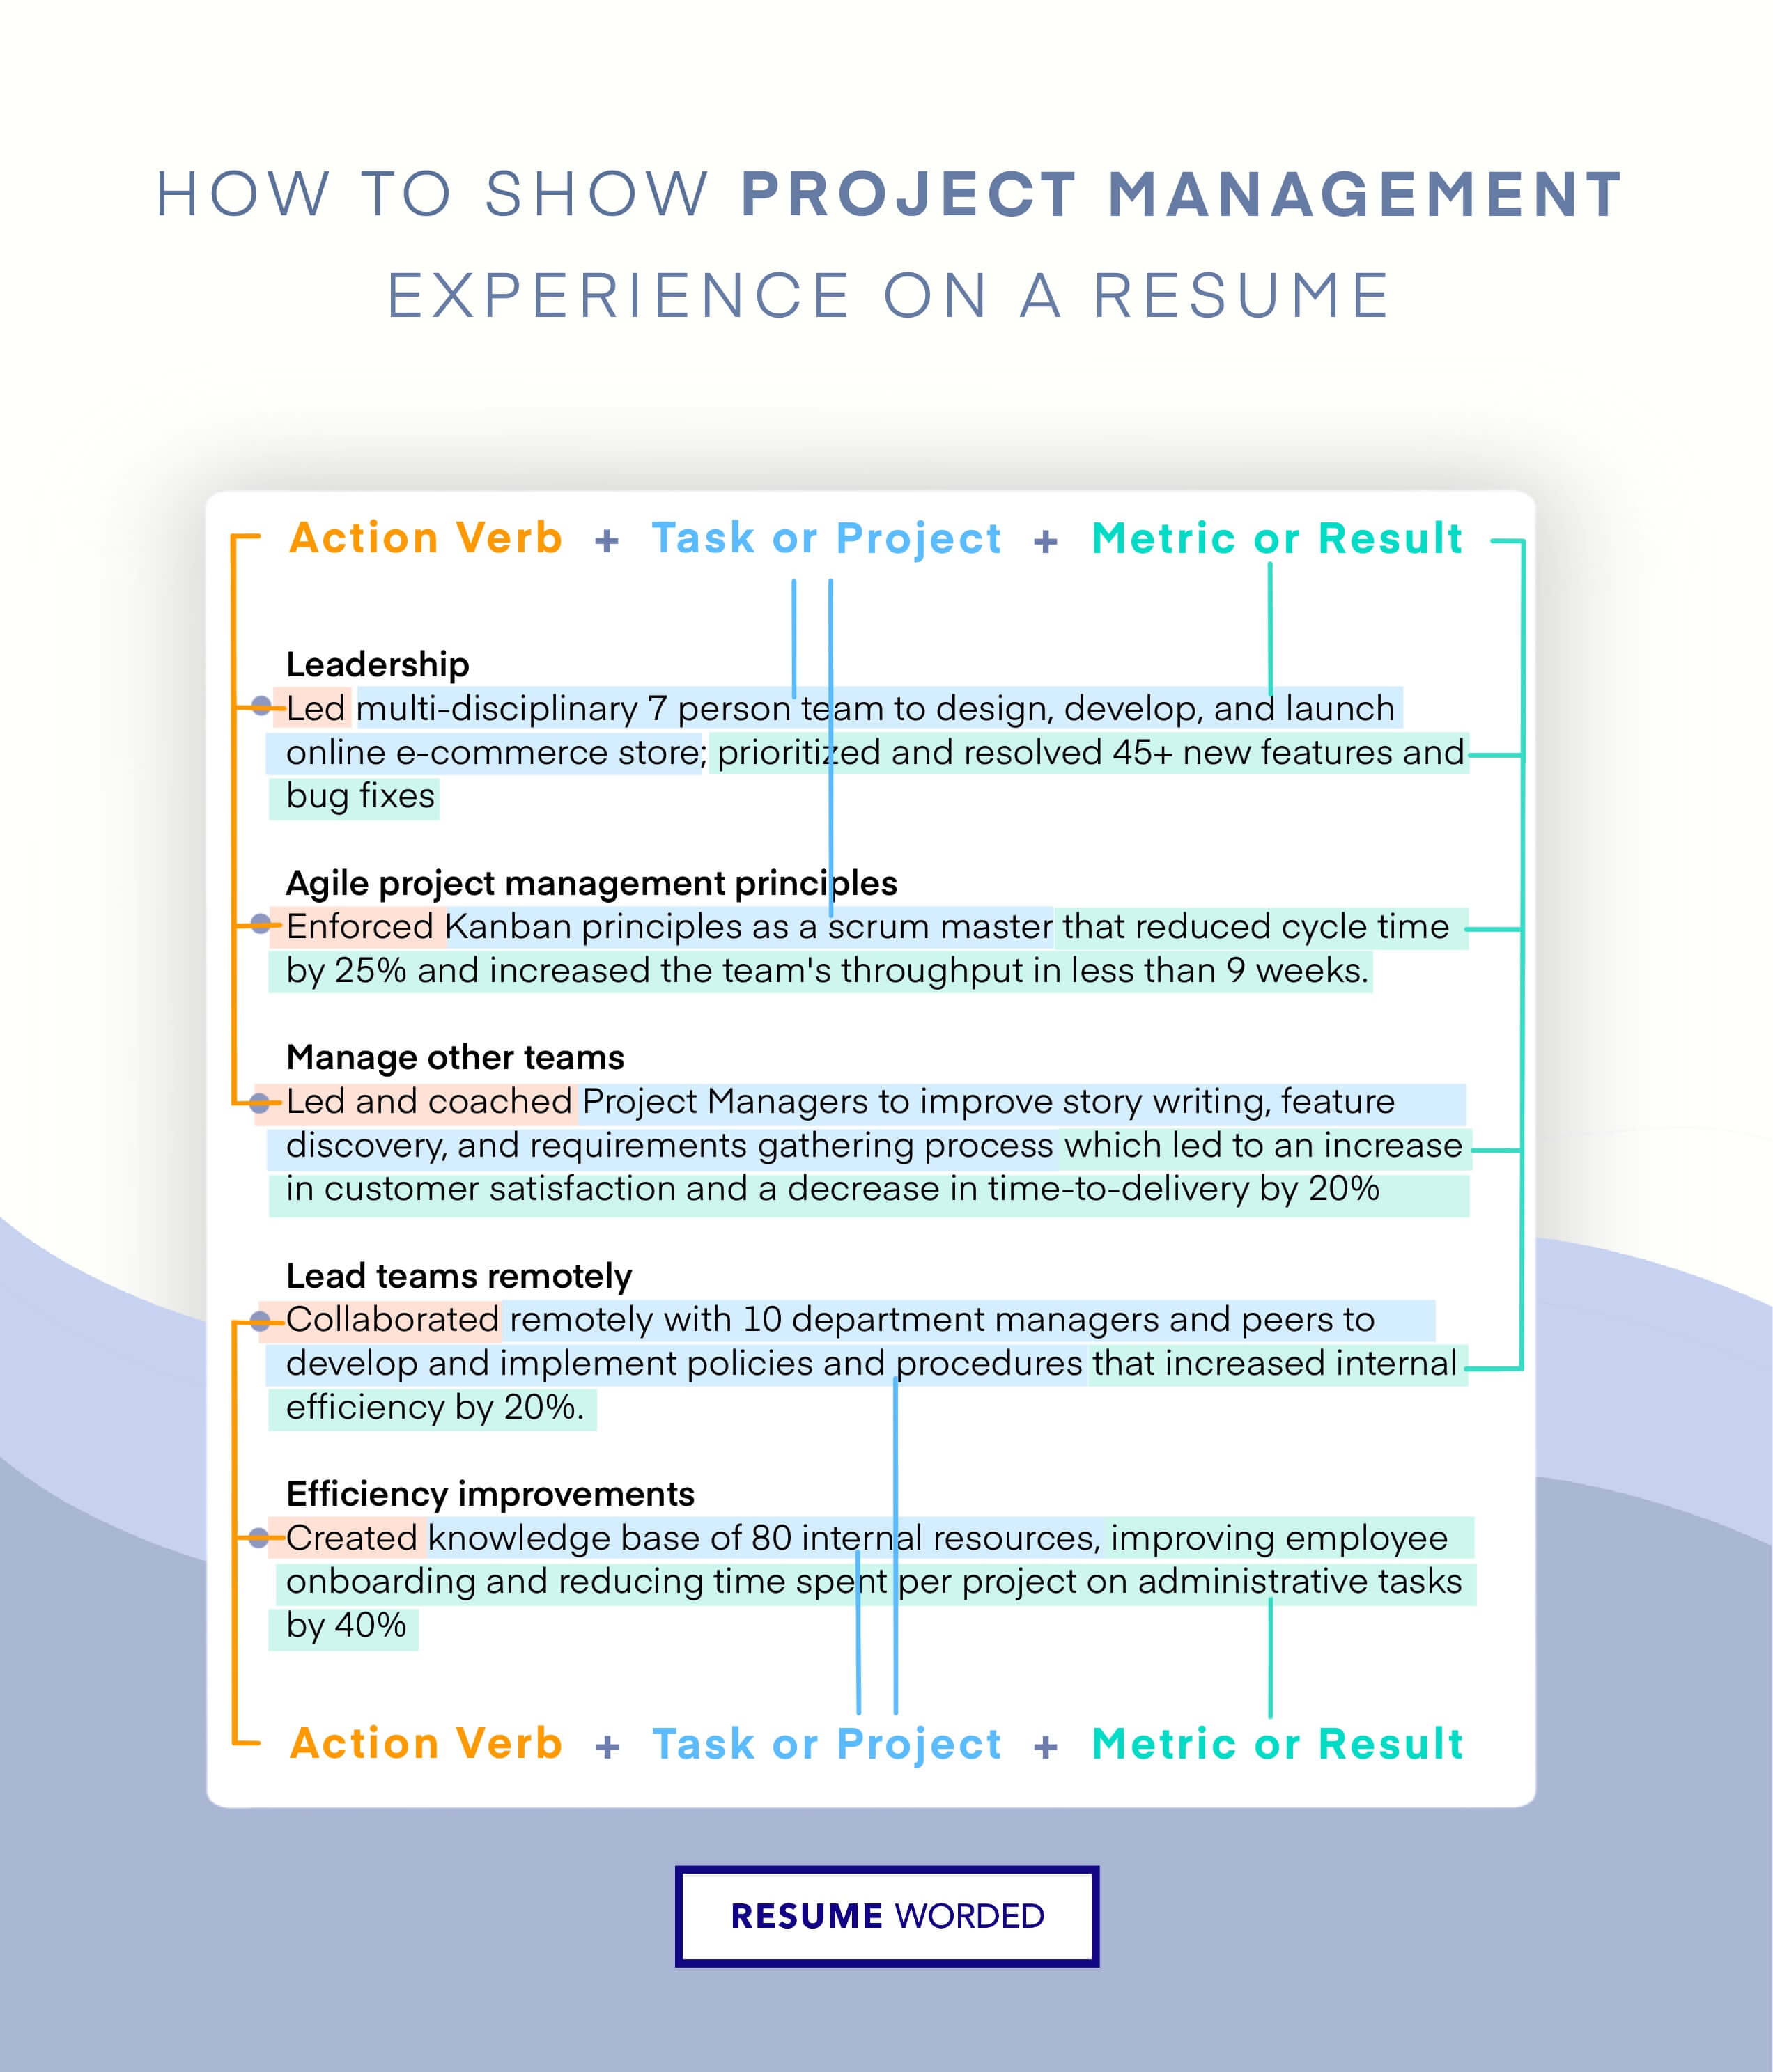 Showcase your project management skills - Production Executive Resume